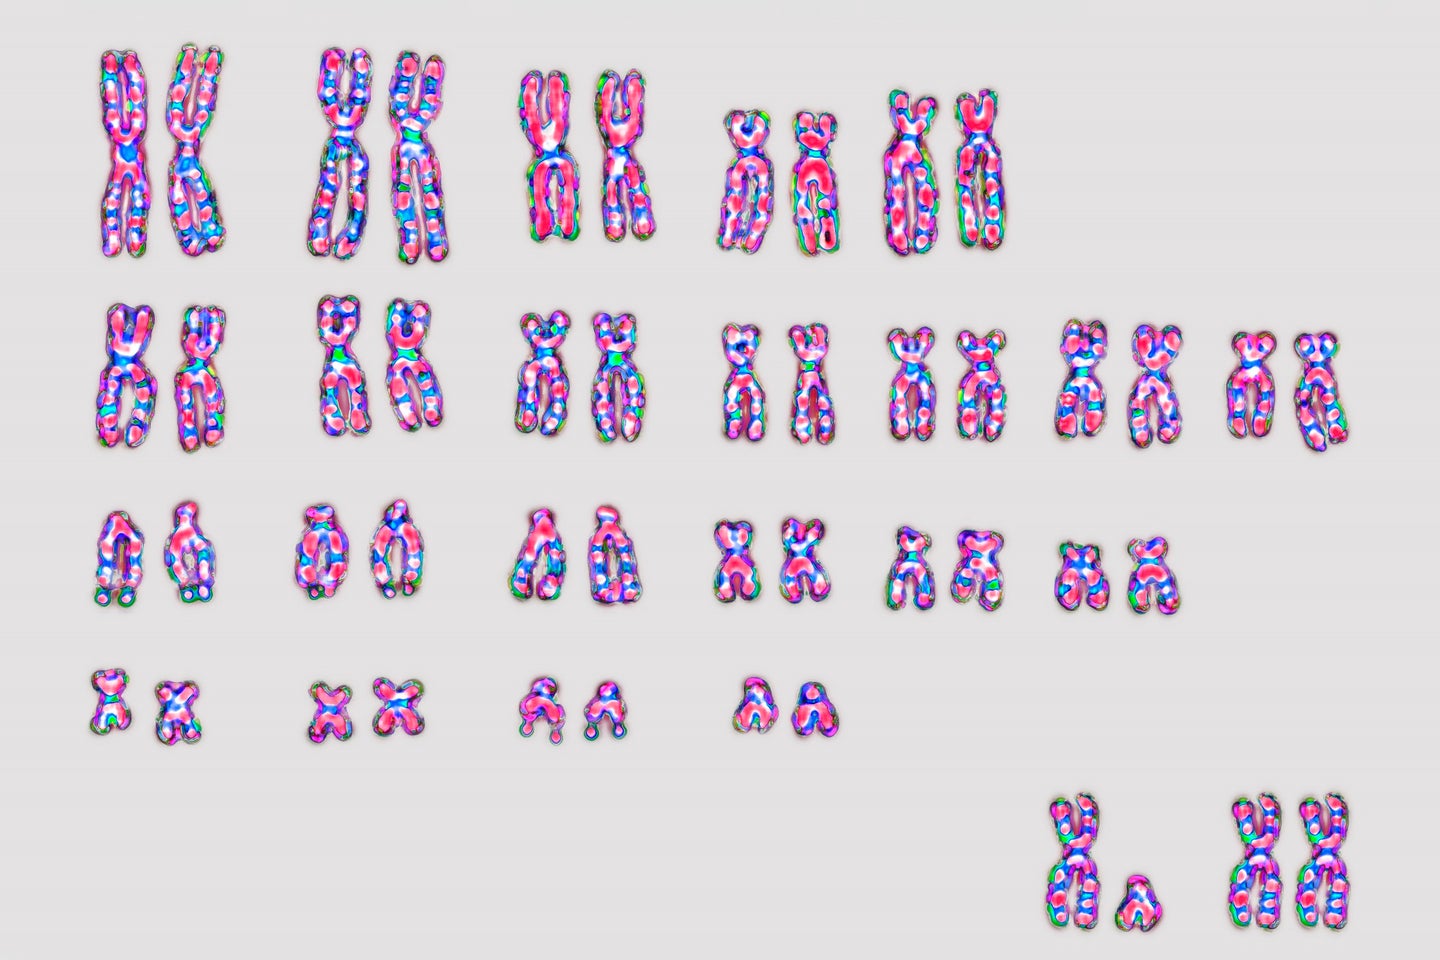 Karyotype of human chromosomes including sex chromosomes XY and XX